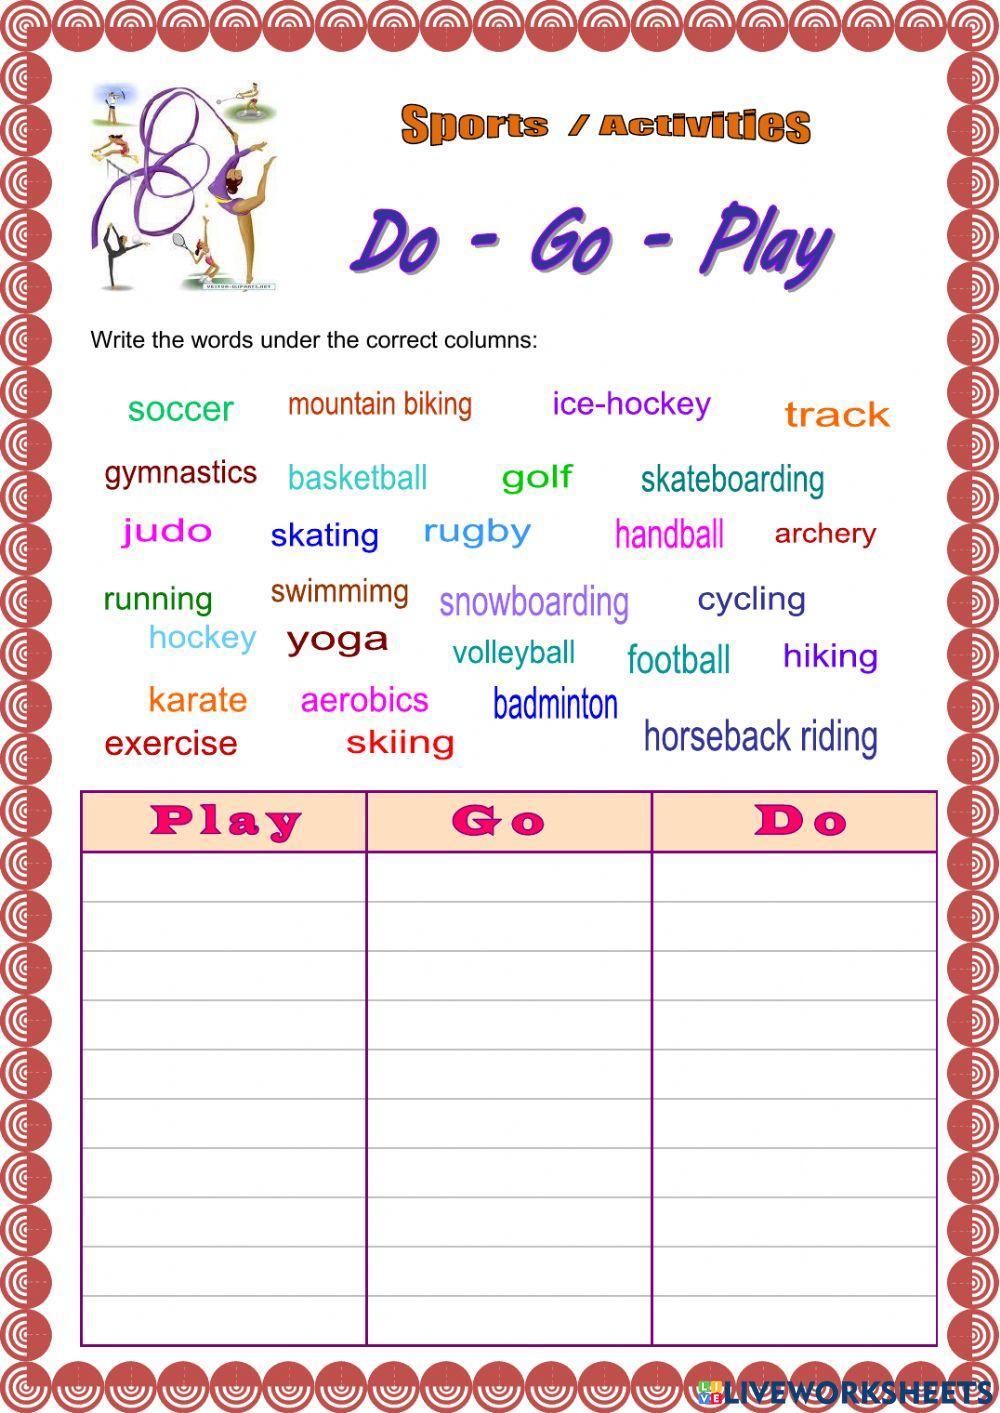 Sports - do - play - go worksheet